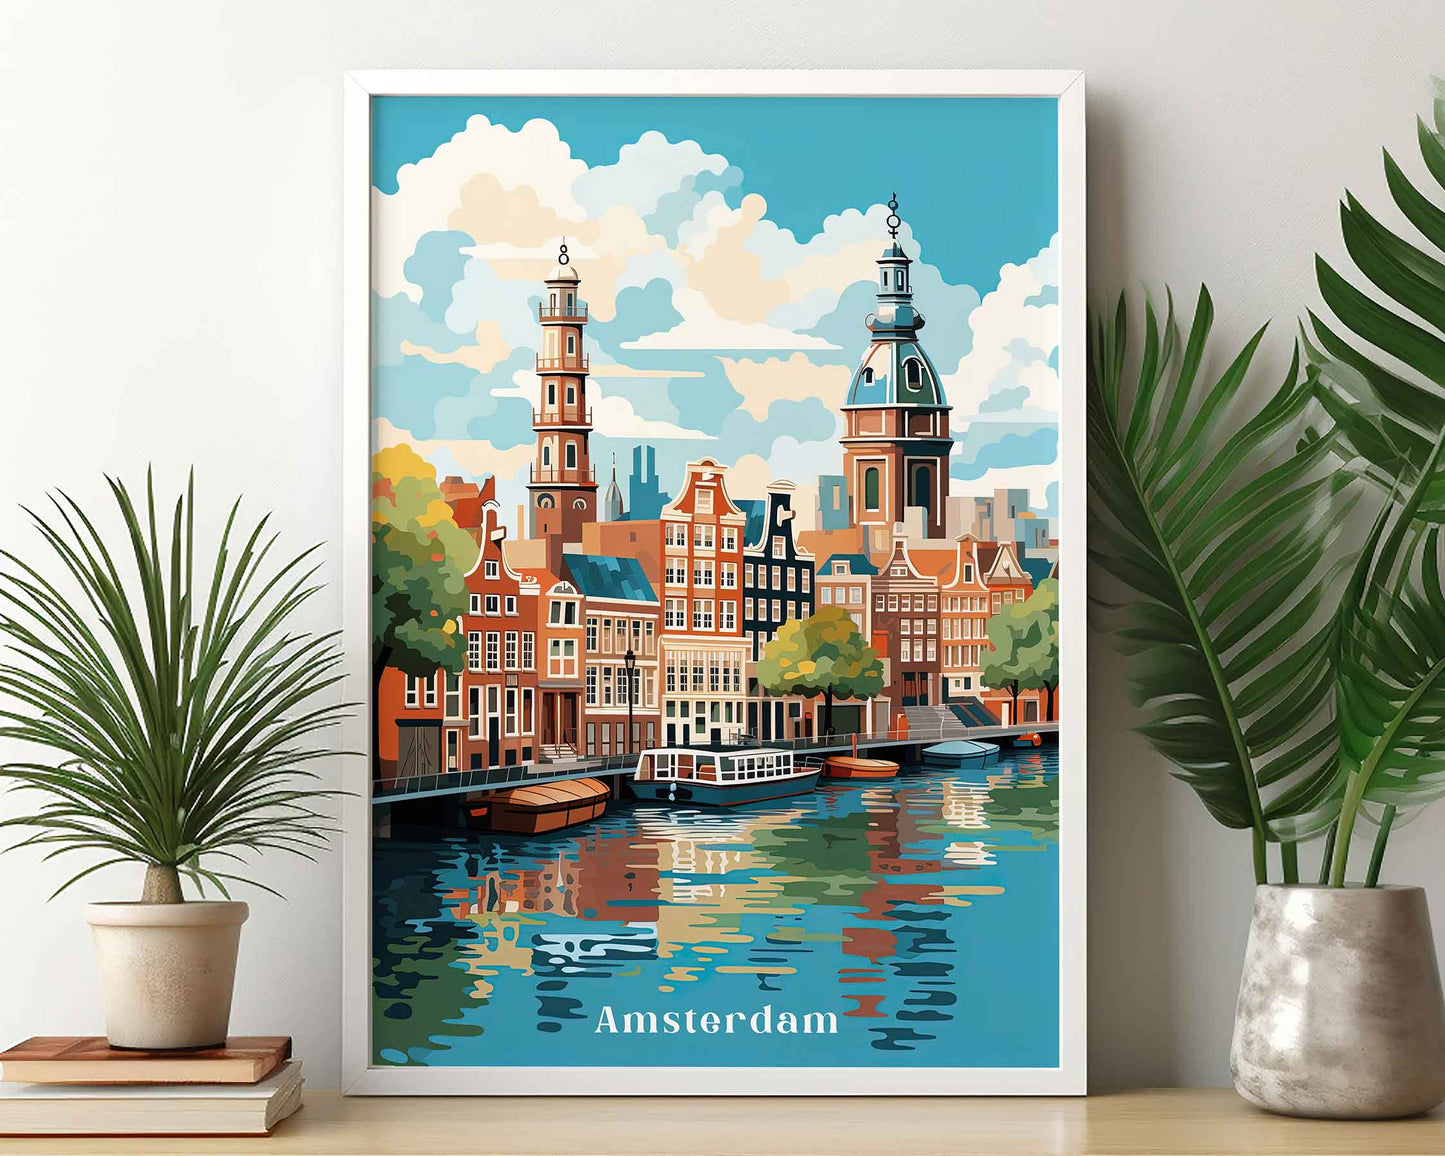 Framed Image of Amsterdam Travel Print Holland Wall Art Poster Illustration